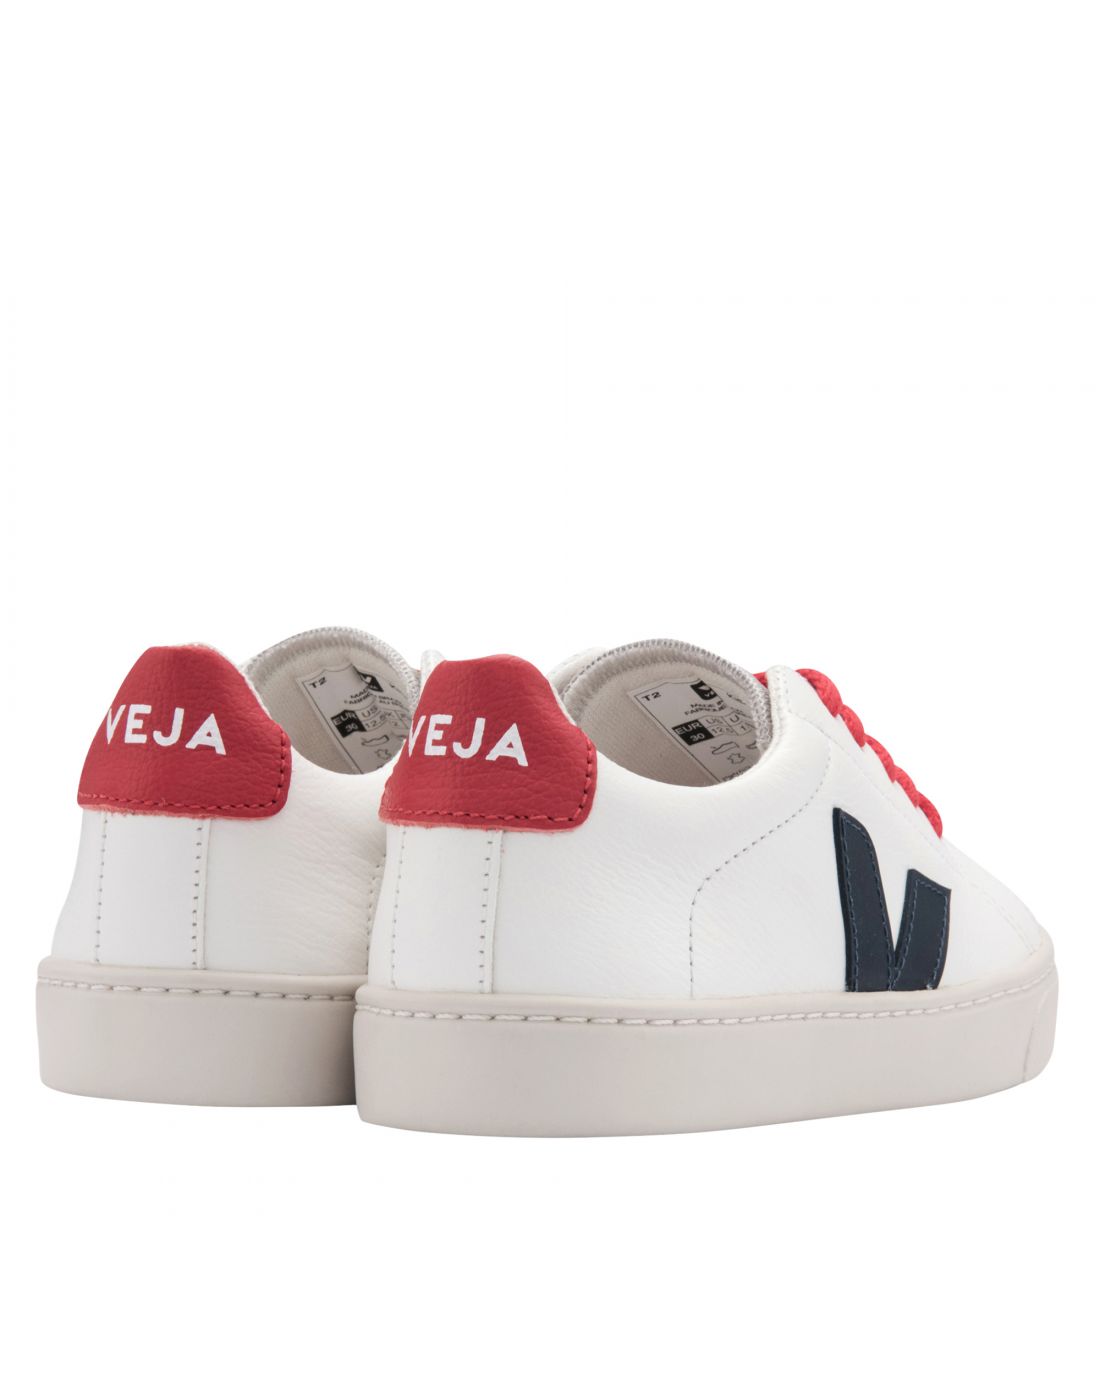 Veja Children's Sneakers Shoes